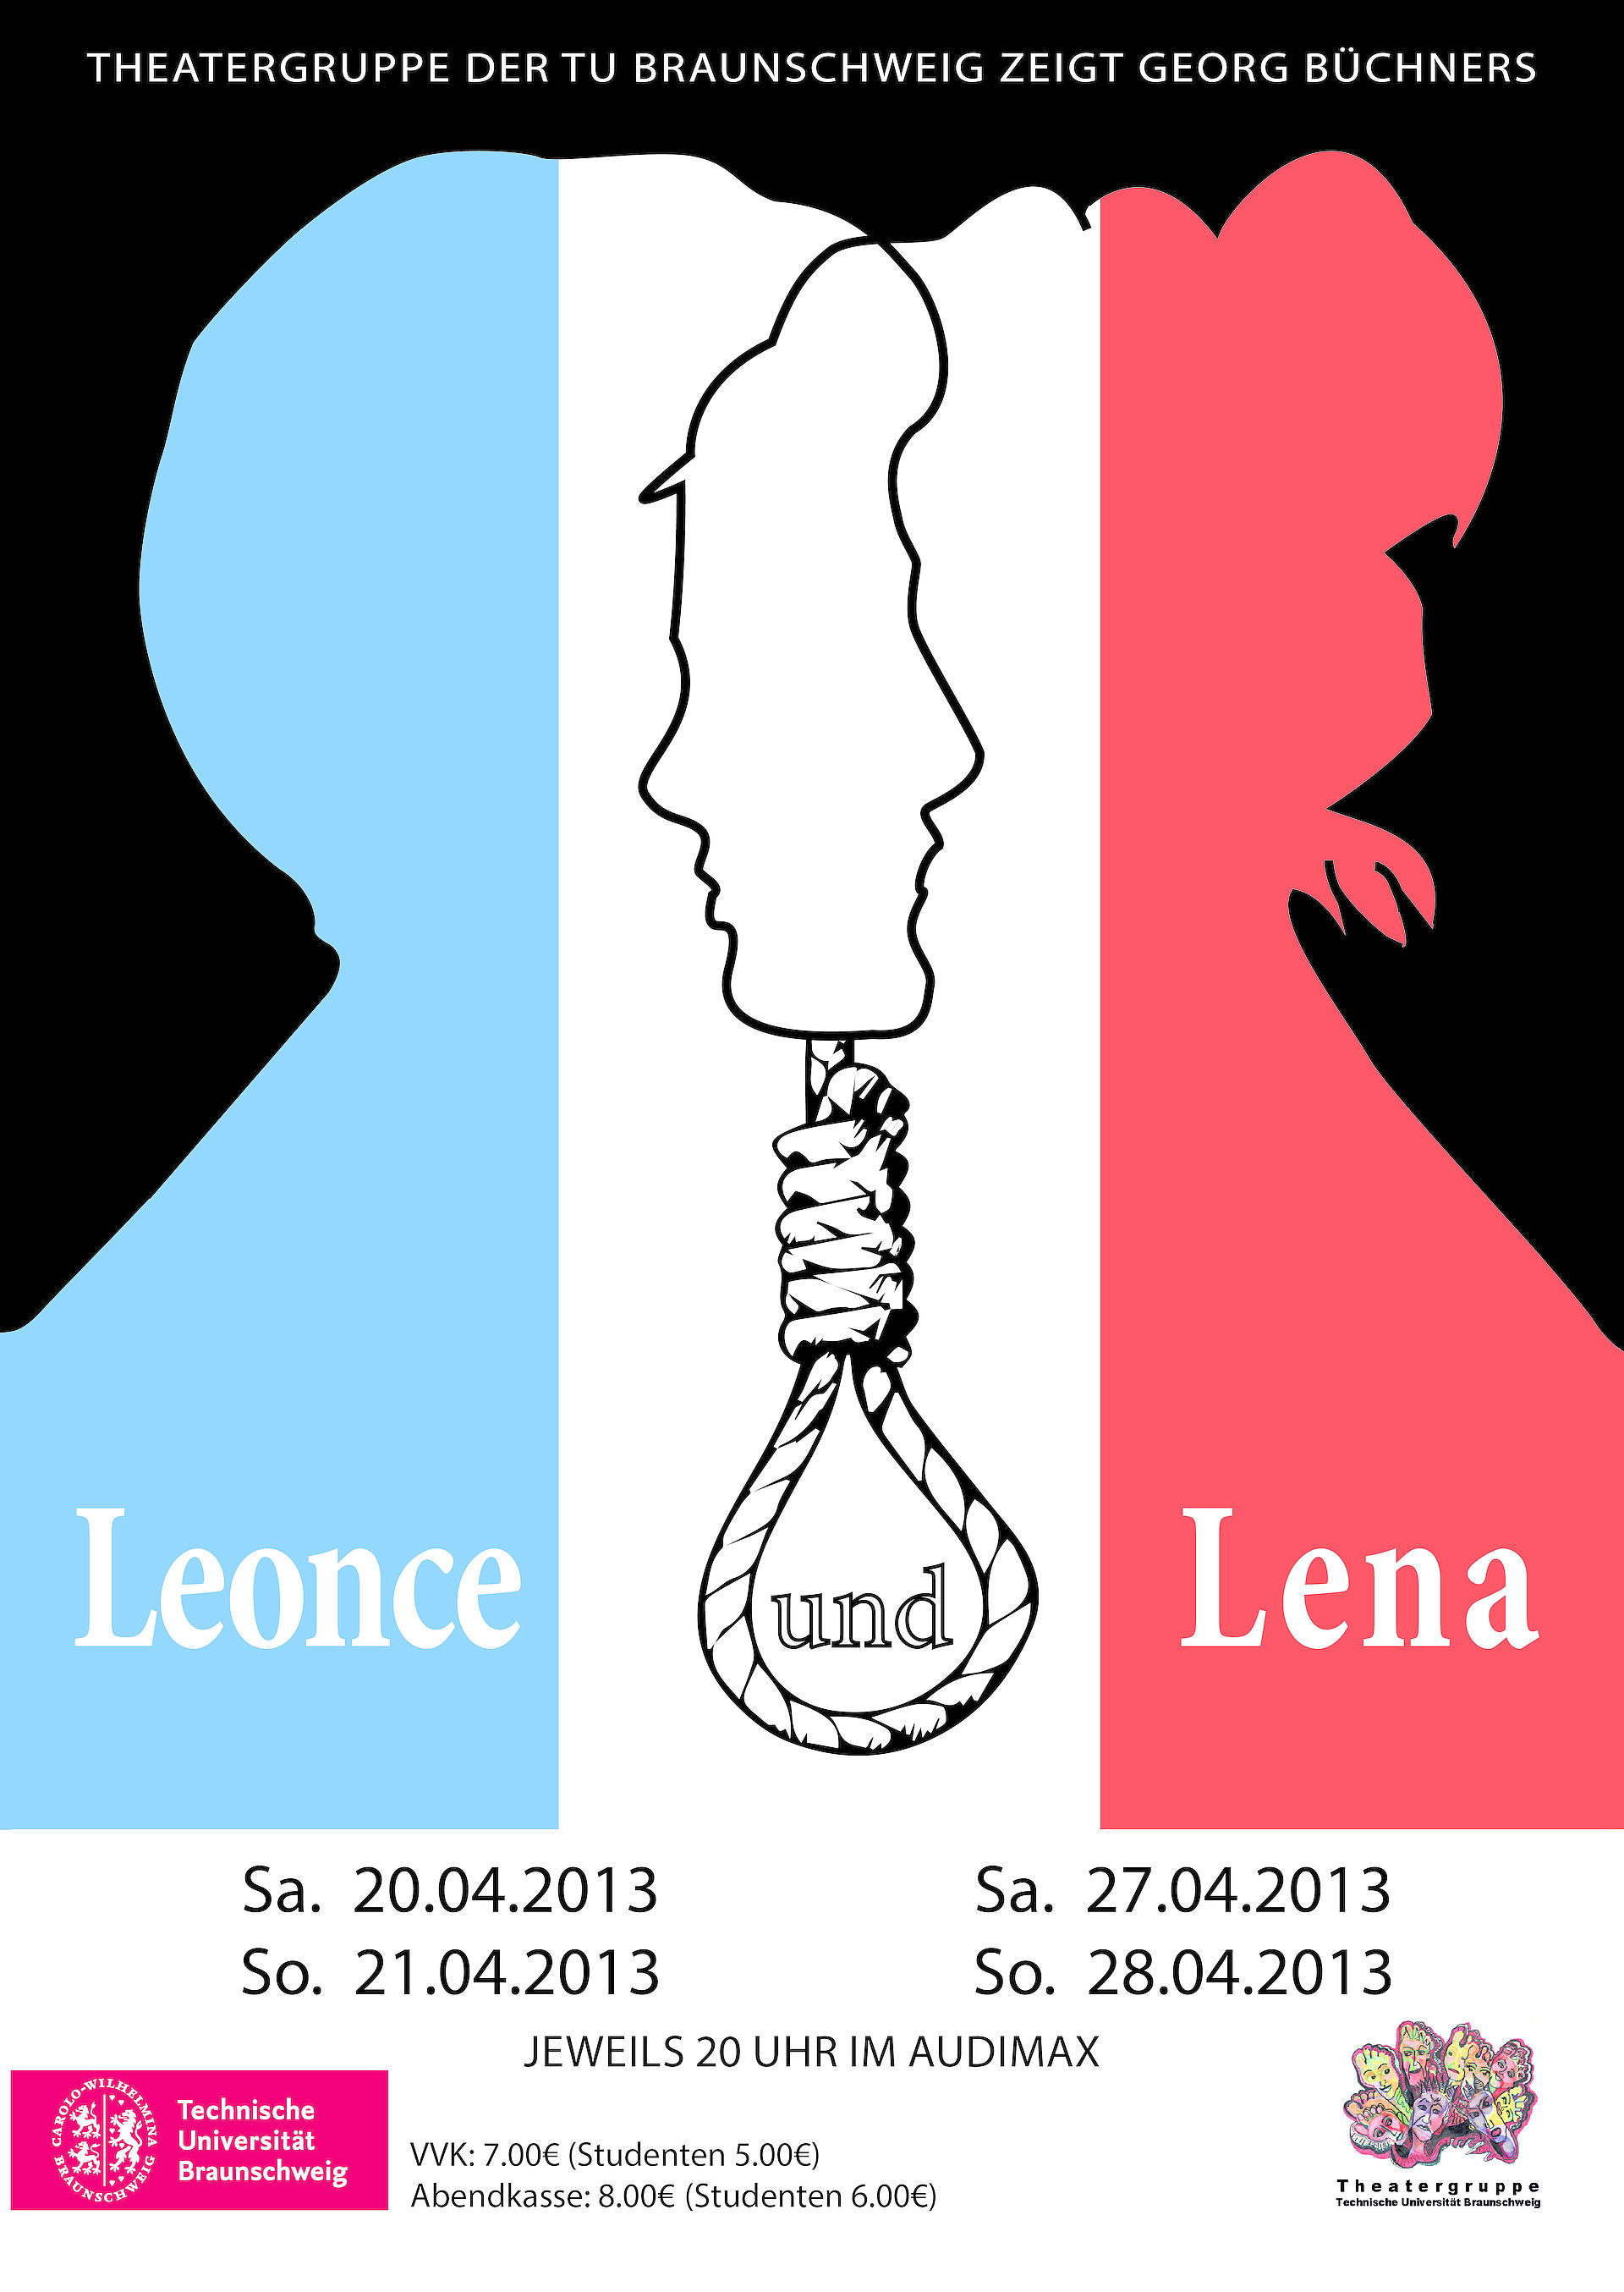 Theaterplakat 2013: Georg Büchners "Leonce und Lena"